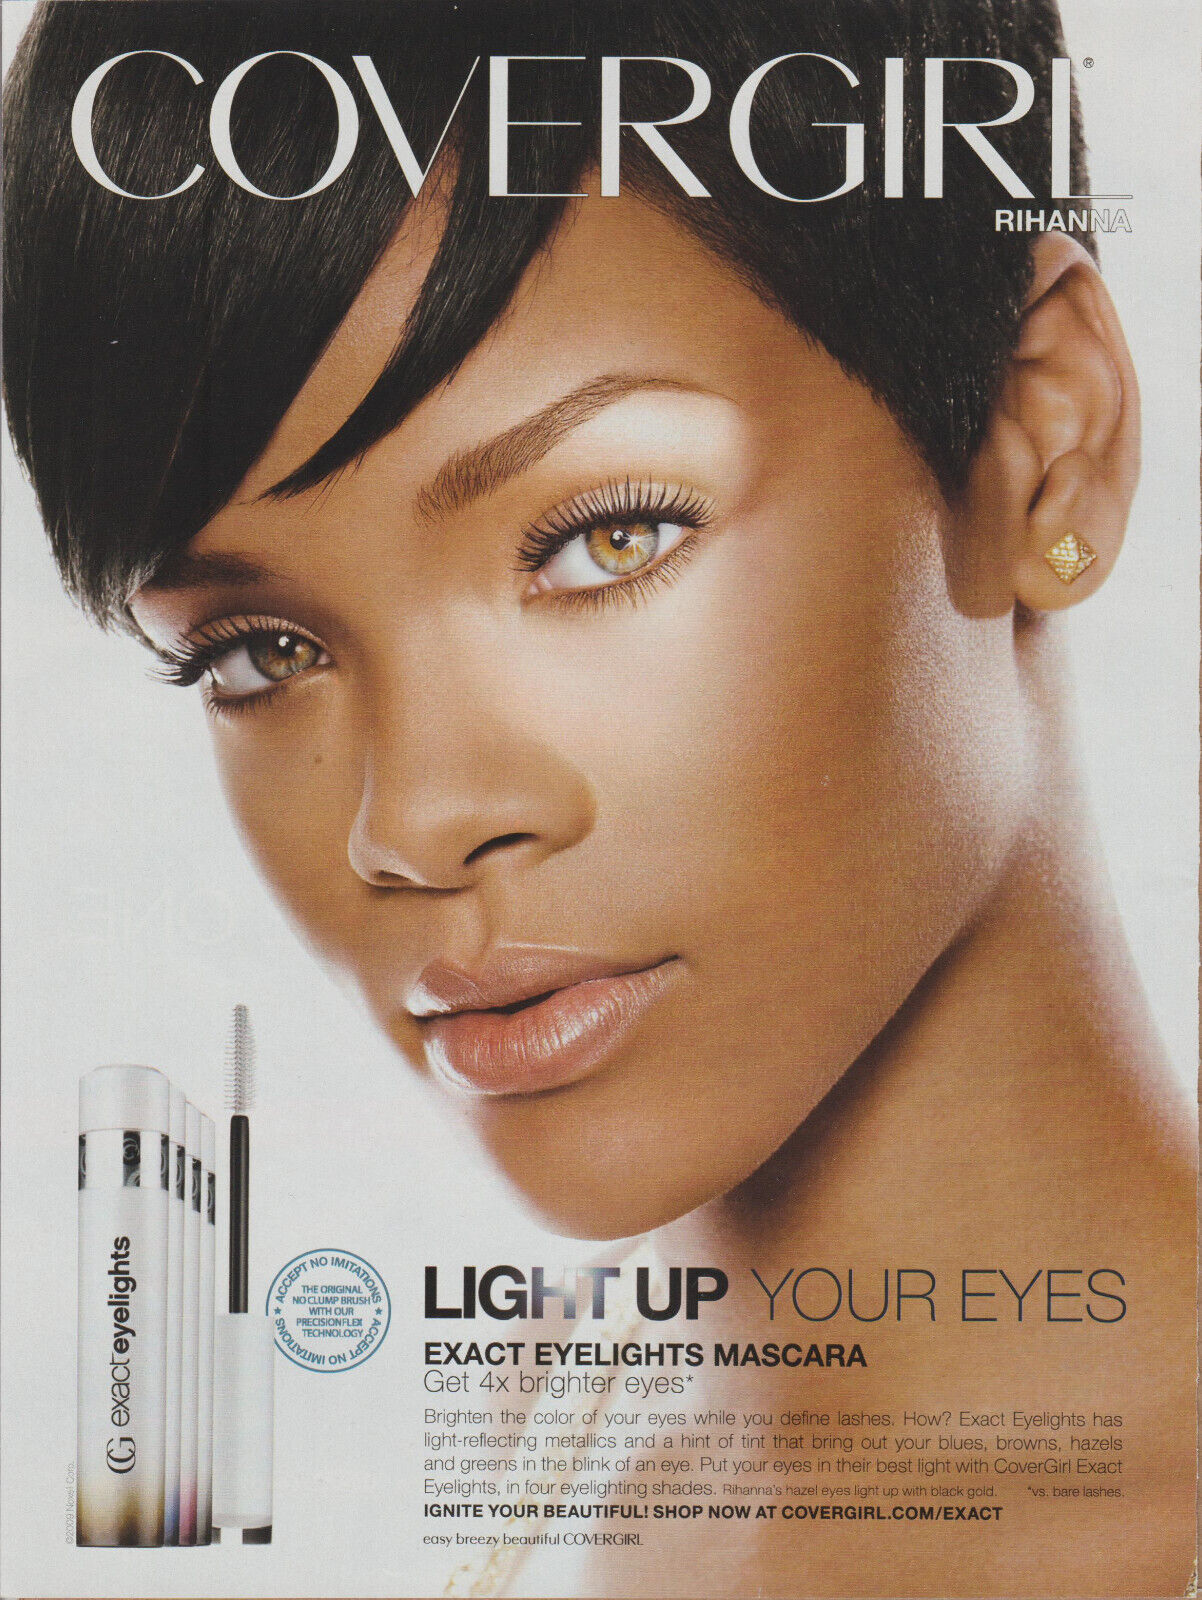 2009 Covergirl Mascara Makeup - Featuring Singer Rihanna - Print Ad Photo